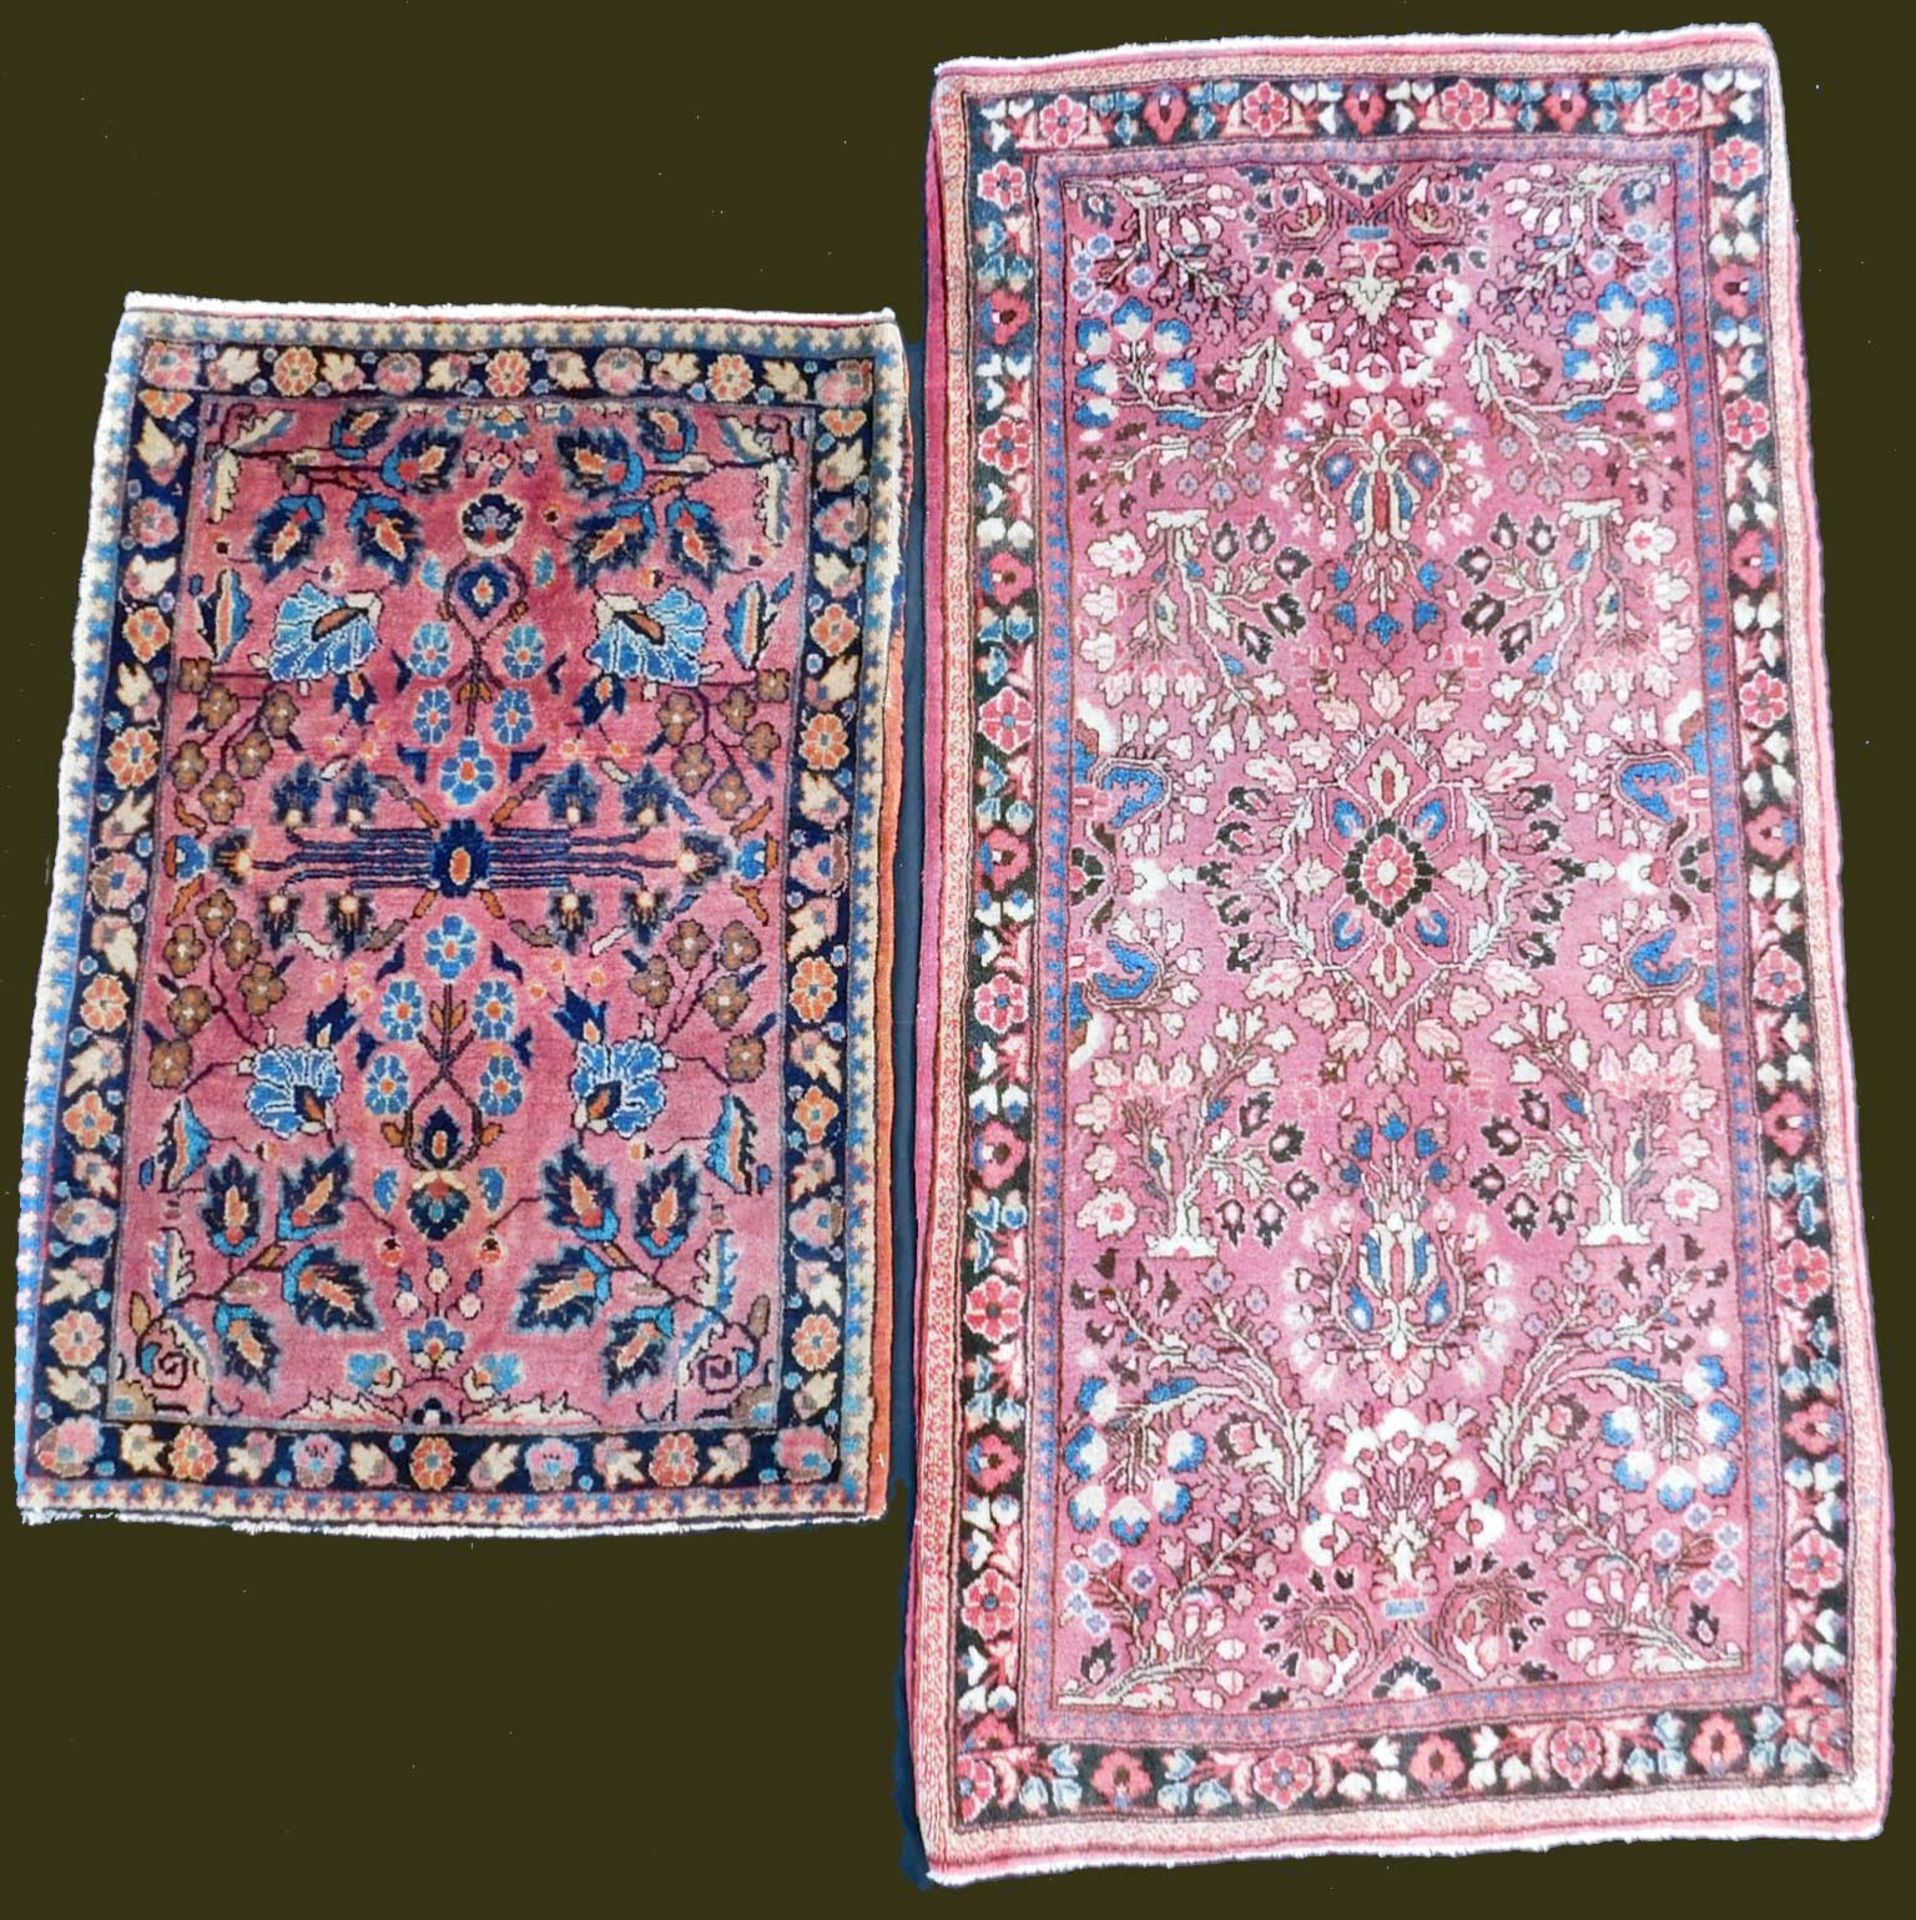 2 Saruk "American Saruk". Persian carpets. Iran, about 80 - 110 years old.